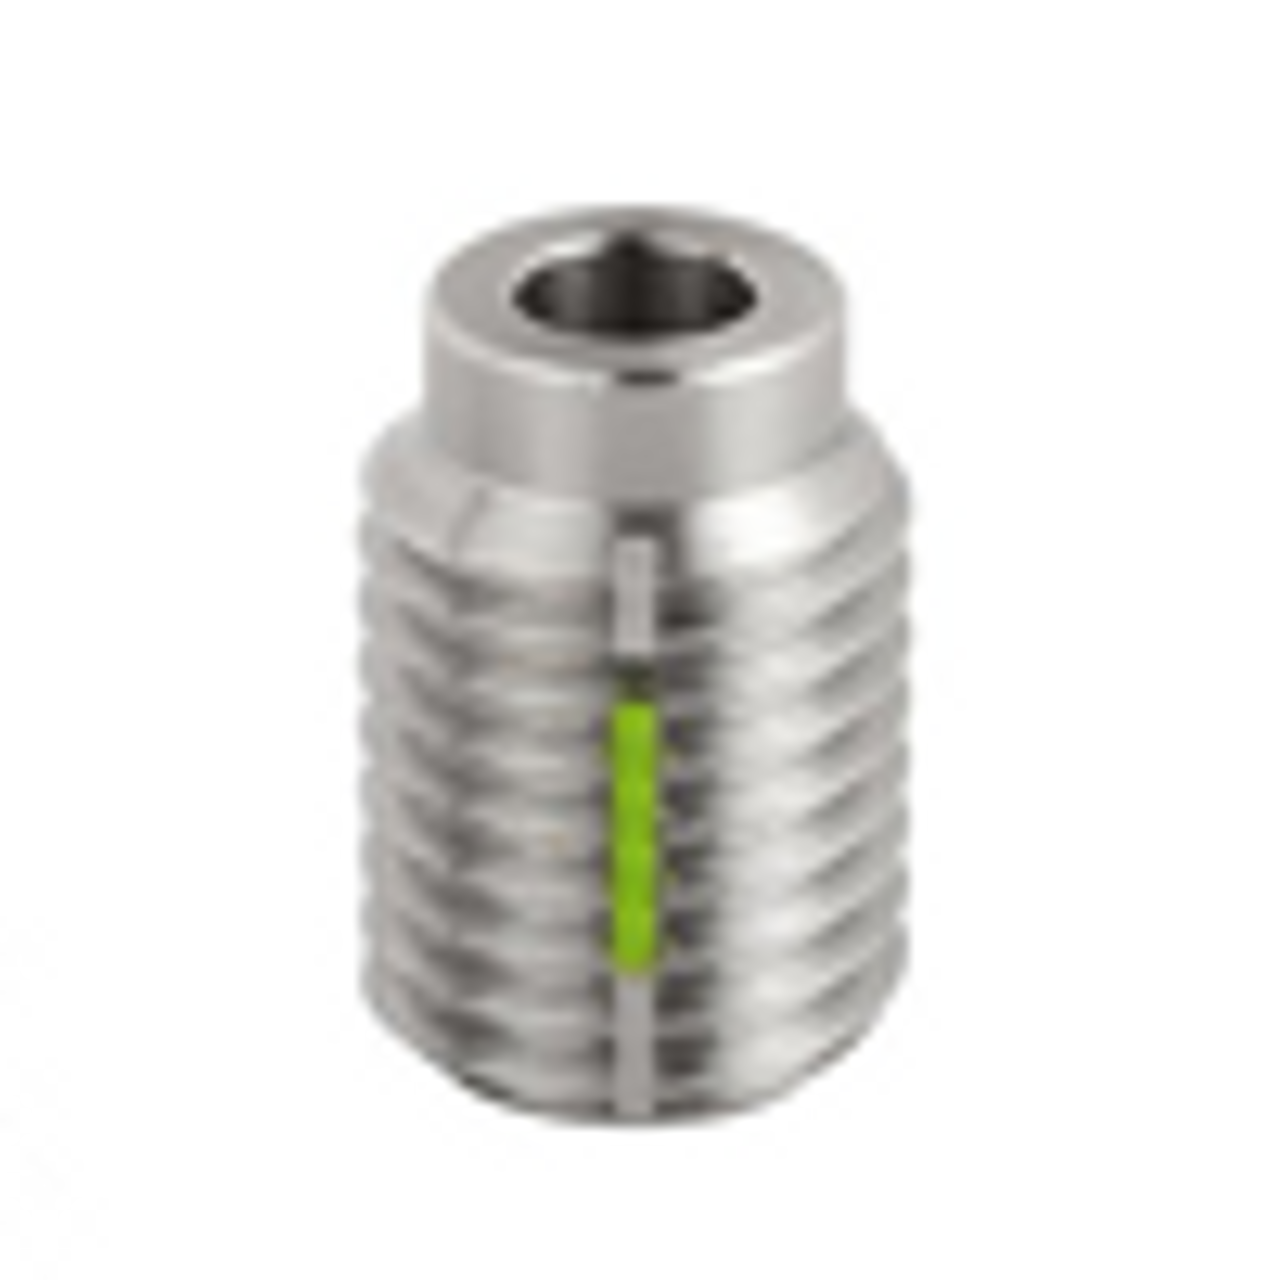 Ball Lock Pins - Locking Pin Supplier